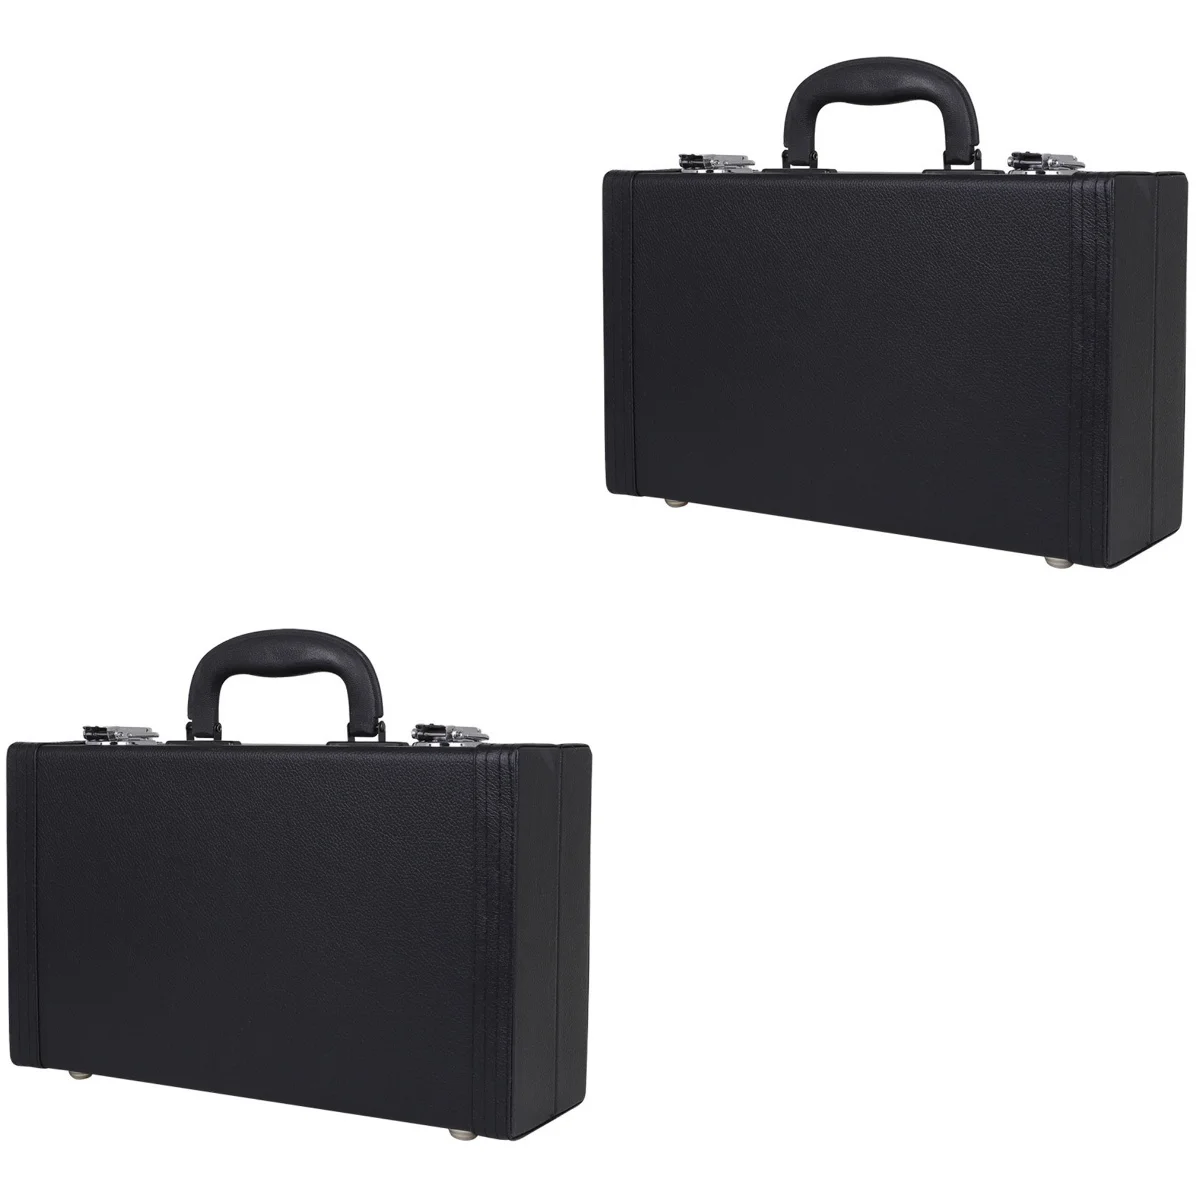 2x Clarinet Holder Bag Clarinet Case Clarinet PU Bag Padded Clarinet Case Clarinet Storage Bag Shockproof Clarinet Box